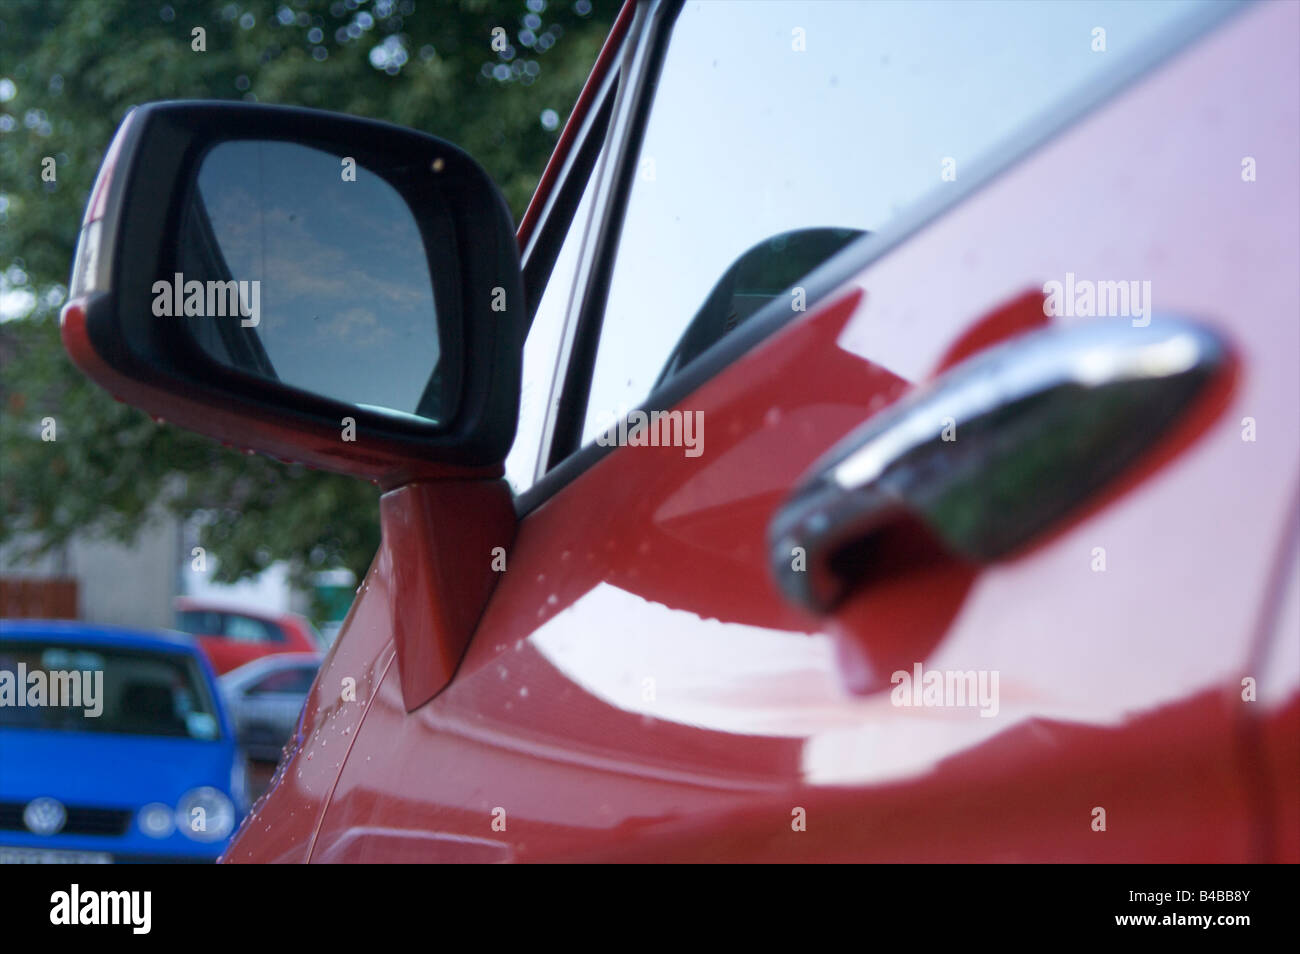 car honda red passenger side handle mirror shine reflection Stock Photo